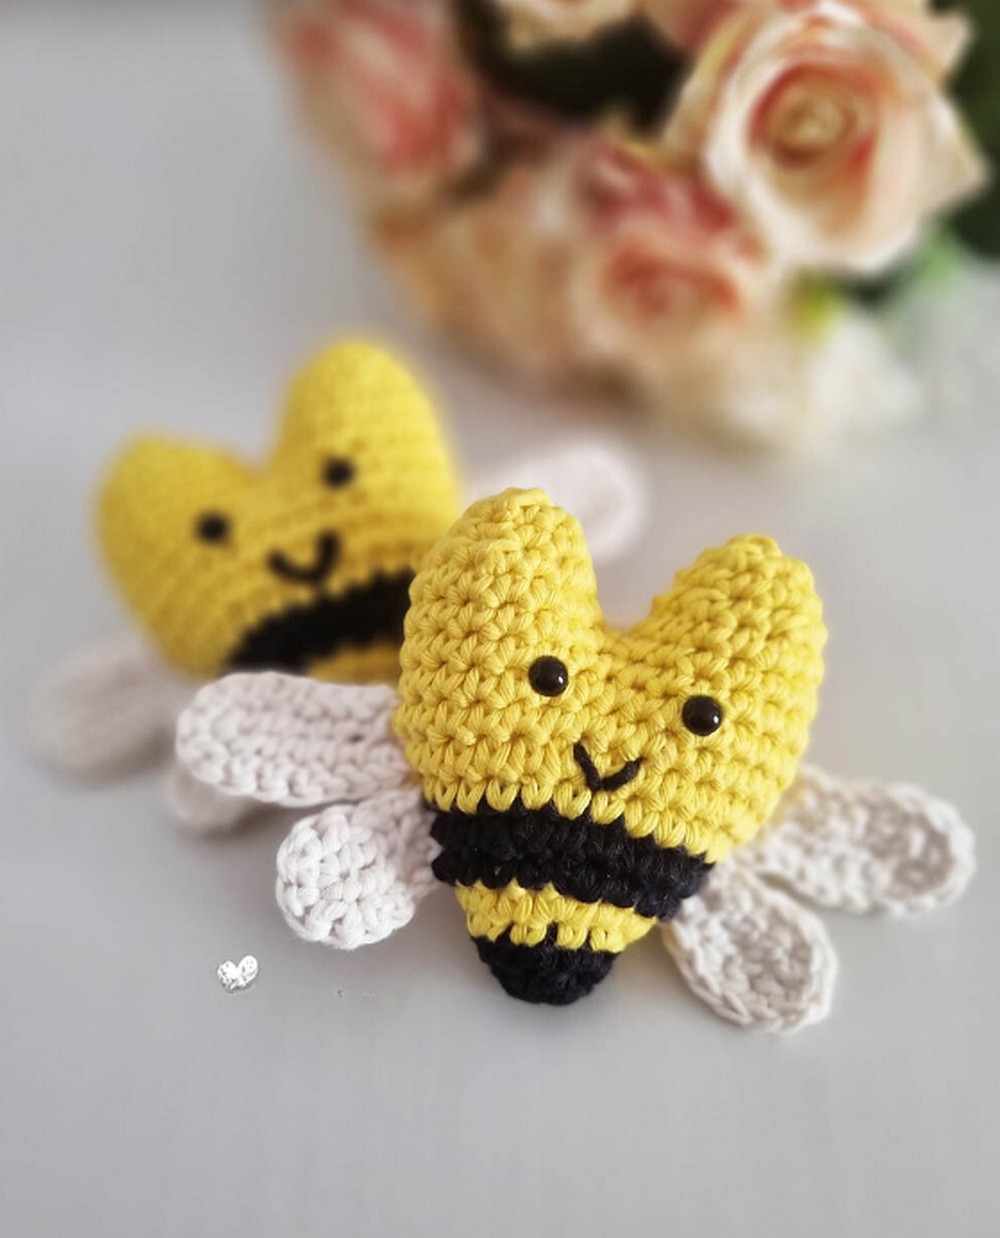 Crochet Heart Bees Amigurumi Pattern